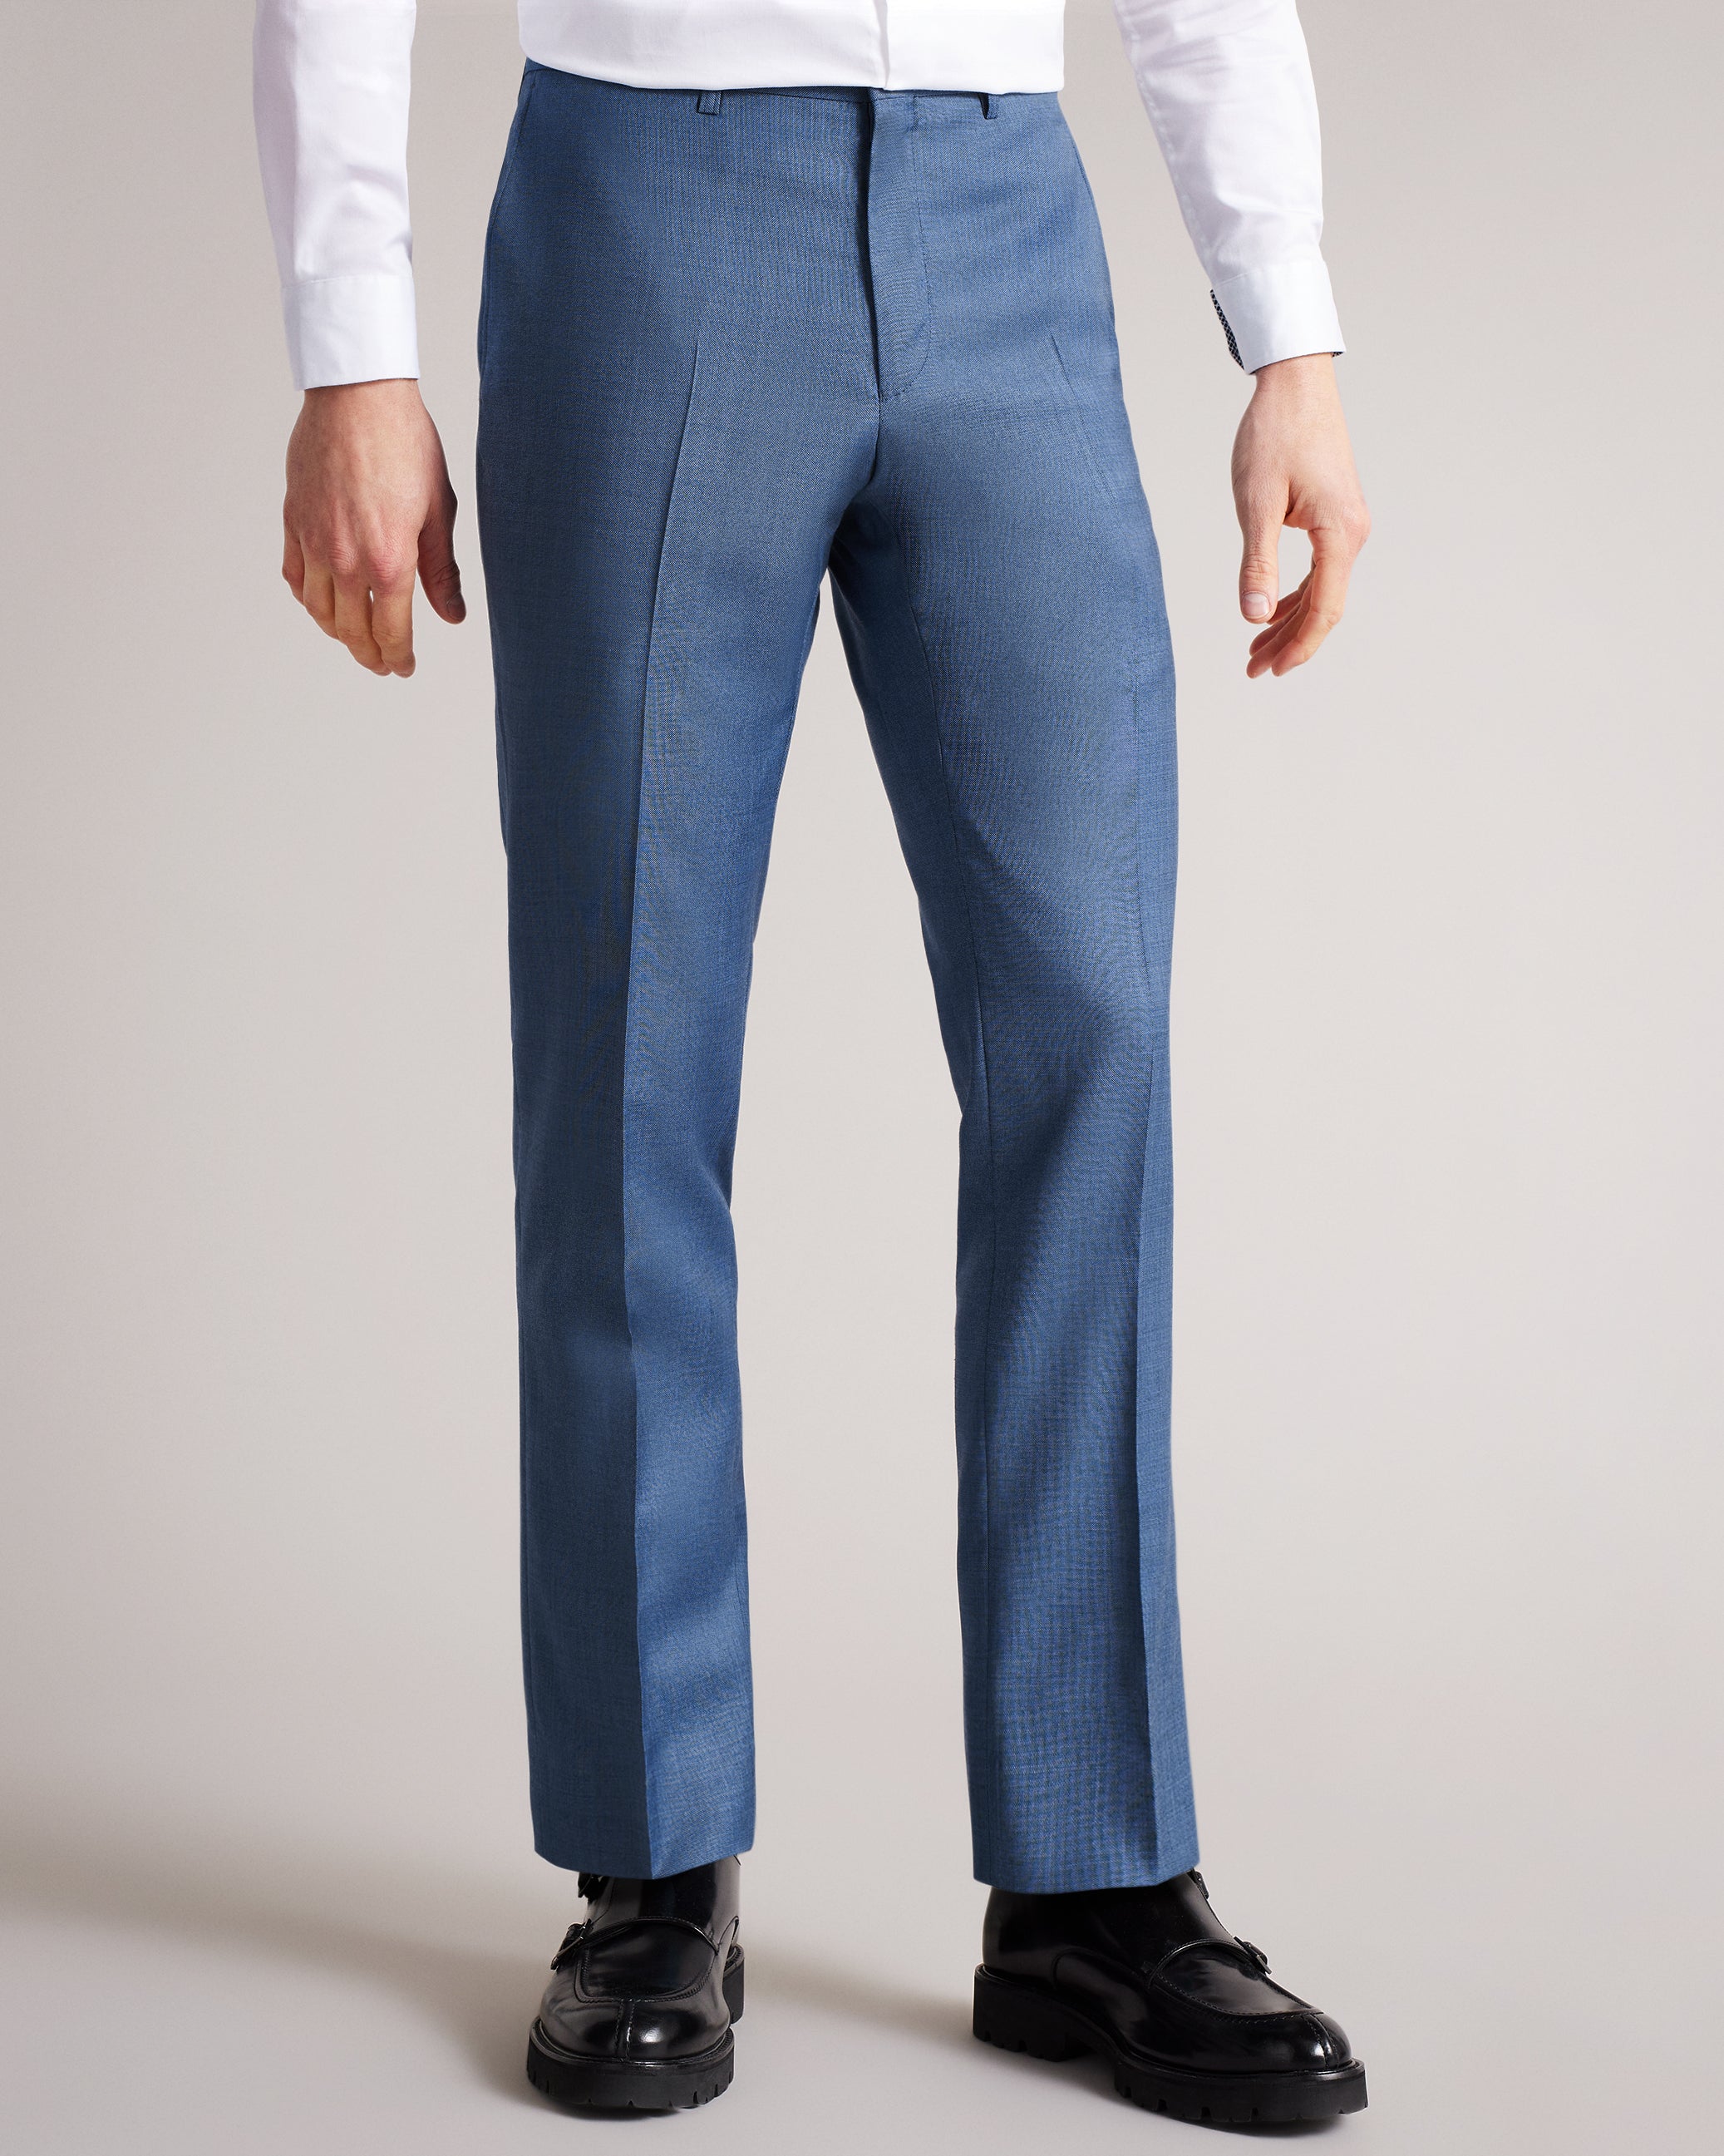 Camdets Slim Light Blue Suit Trousers